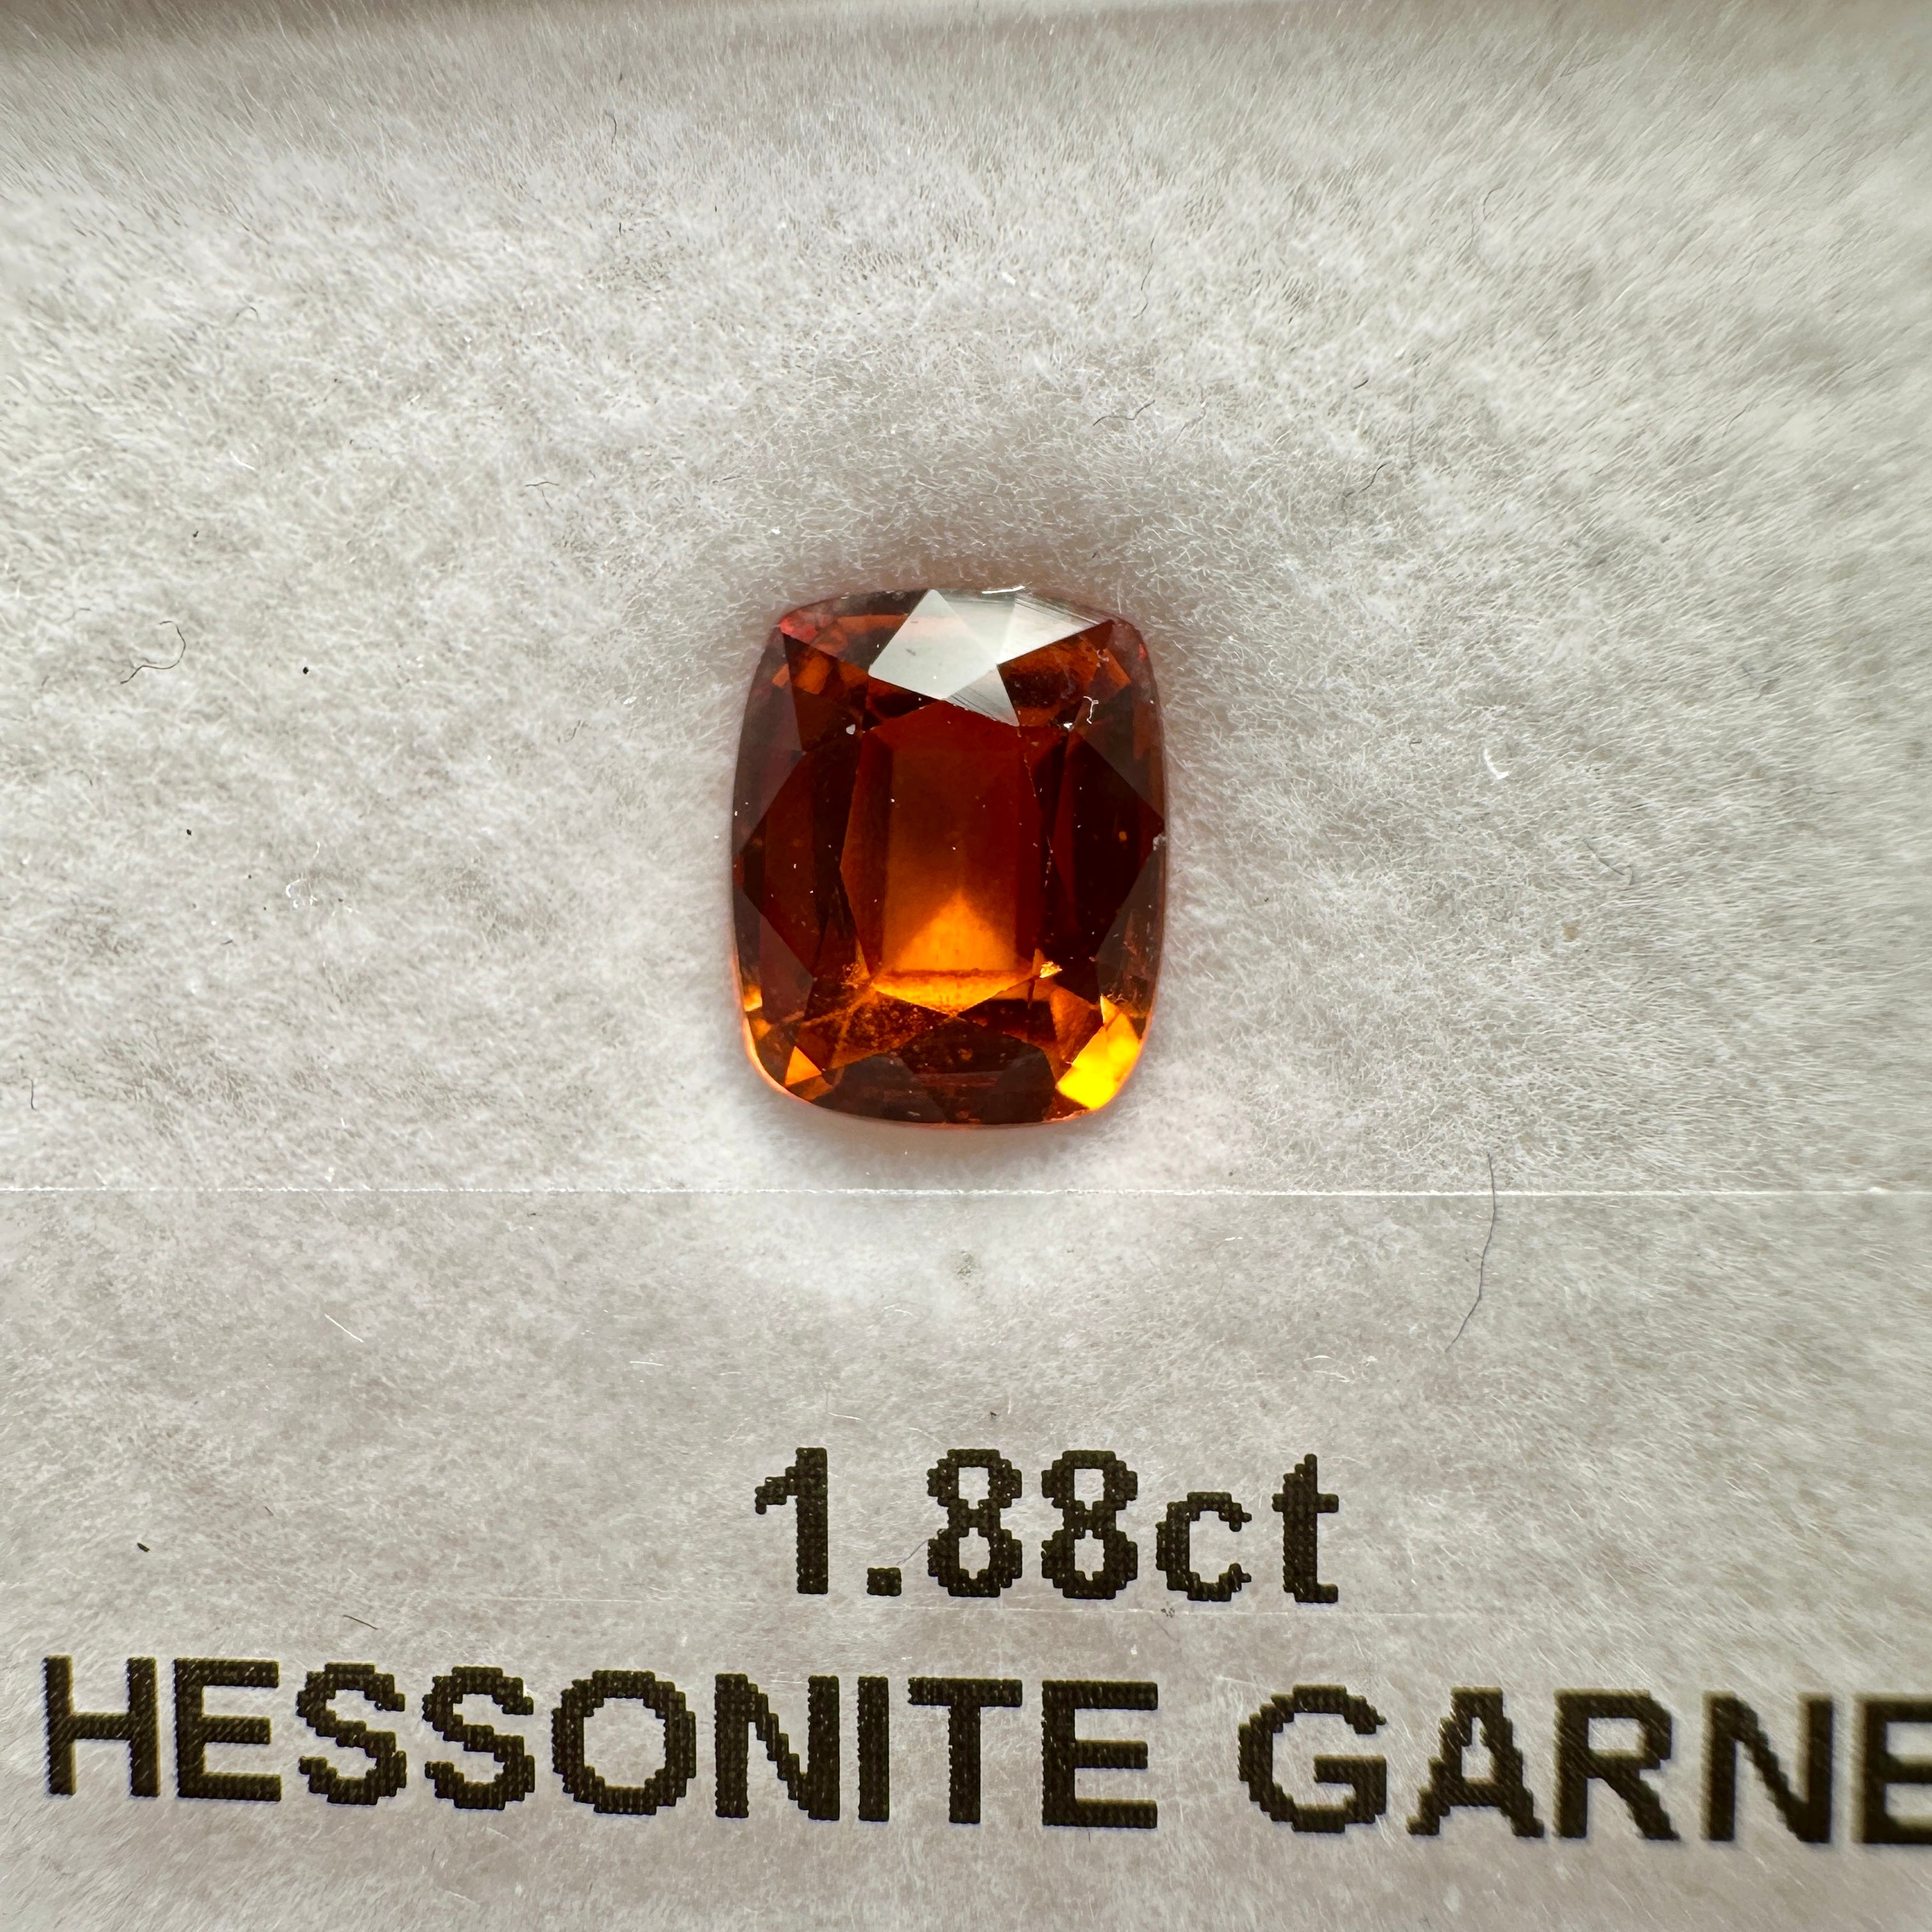 1.88ct Hessonite Garnet, Untreated Unheated, native cut